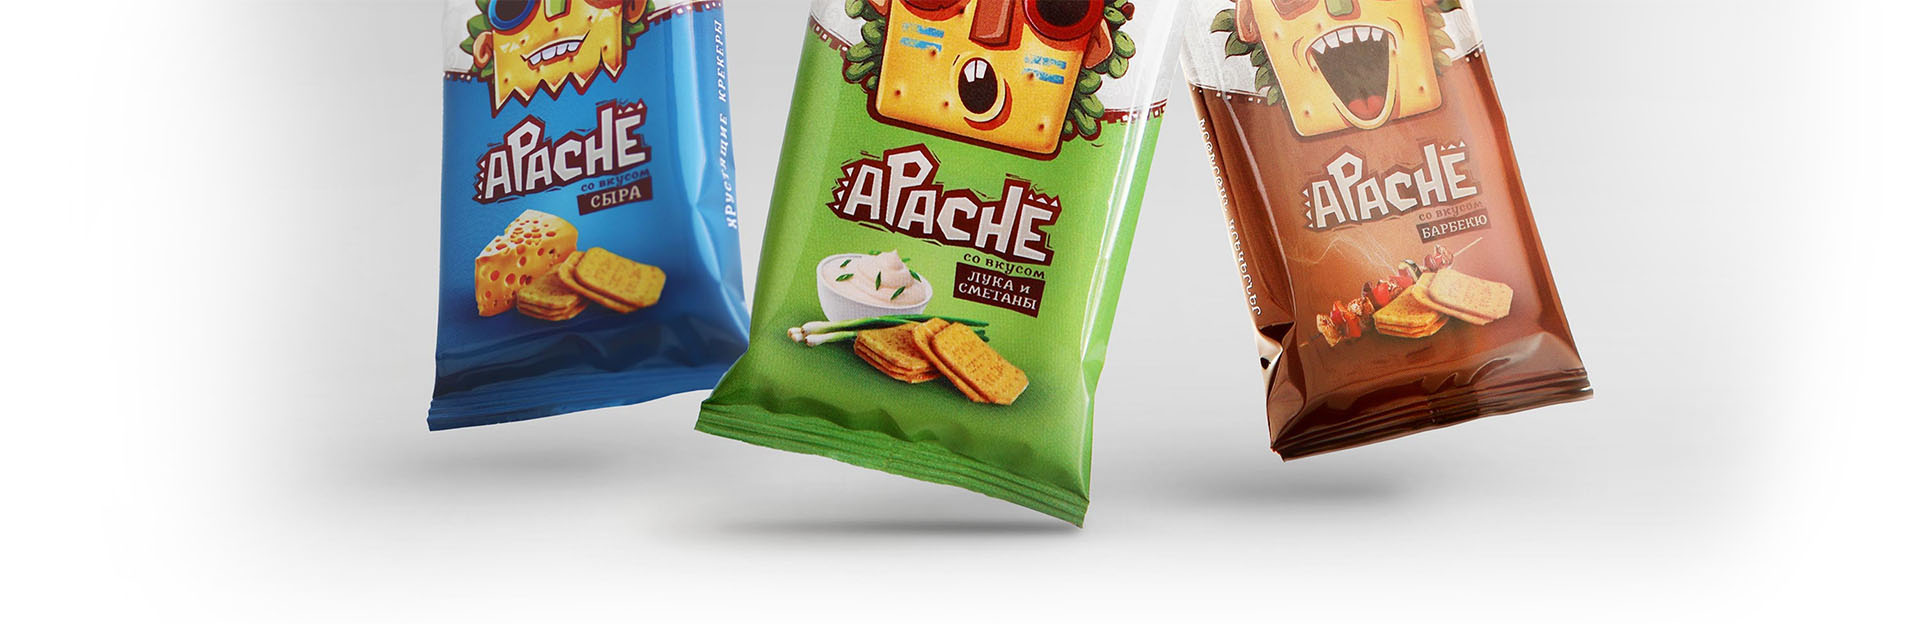 Apache cracker